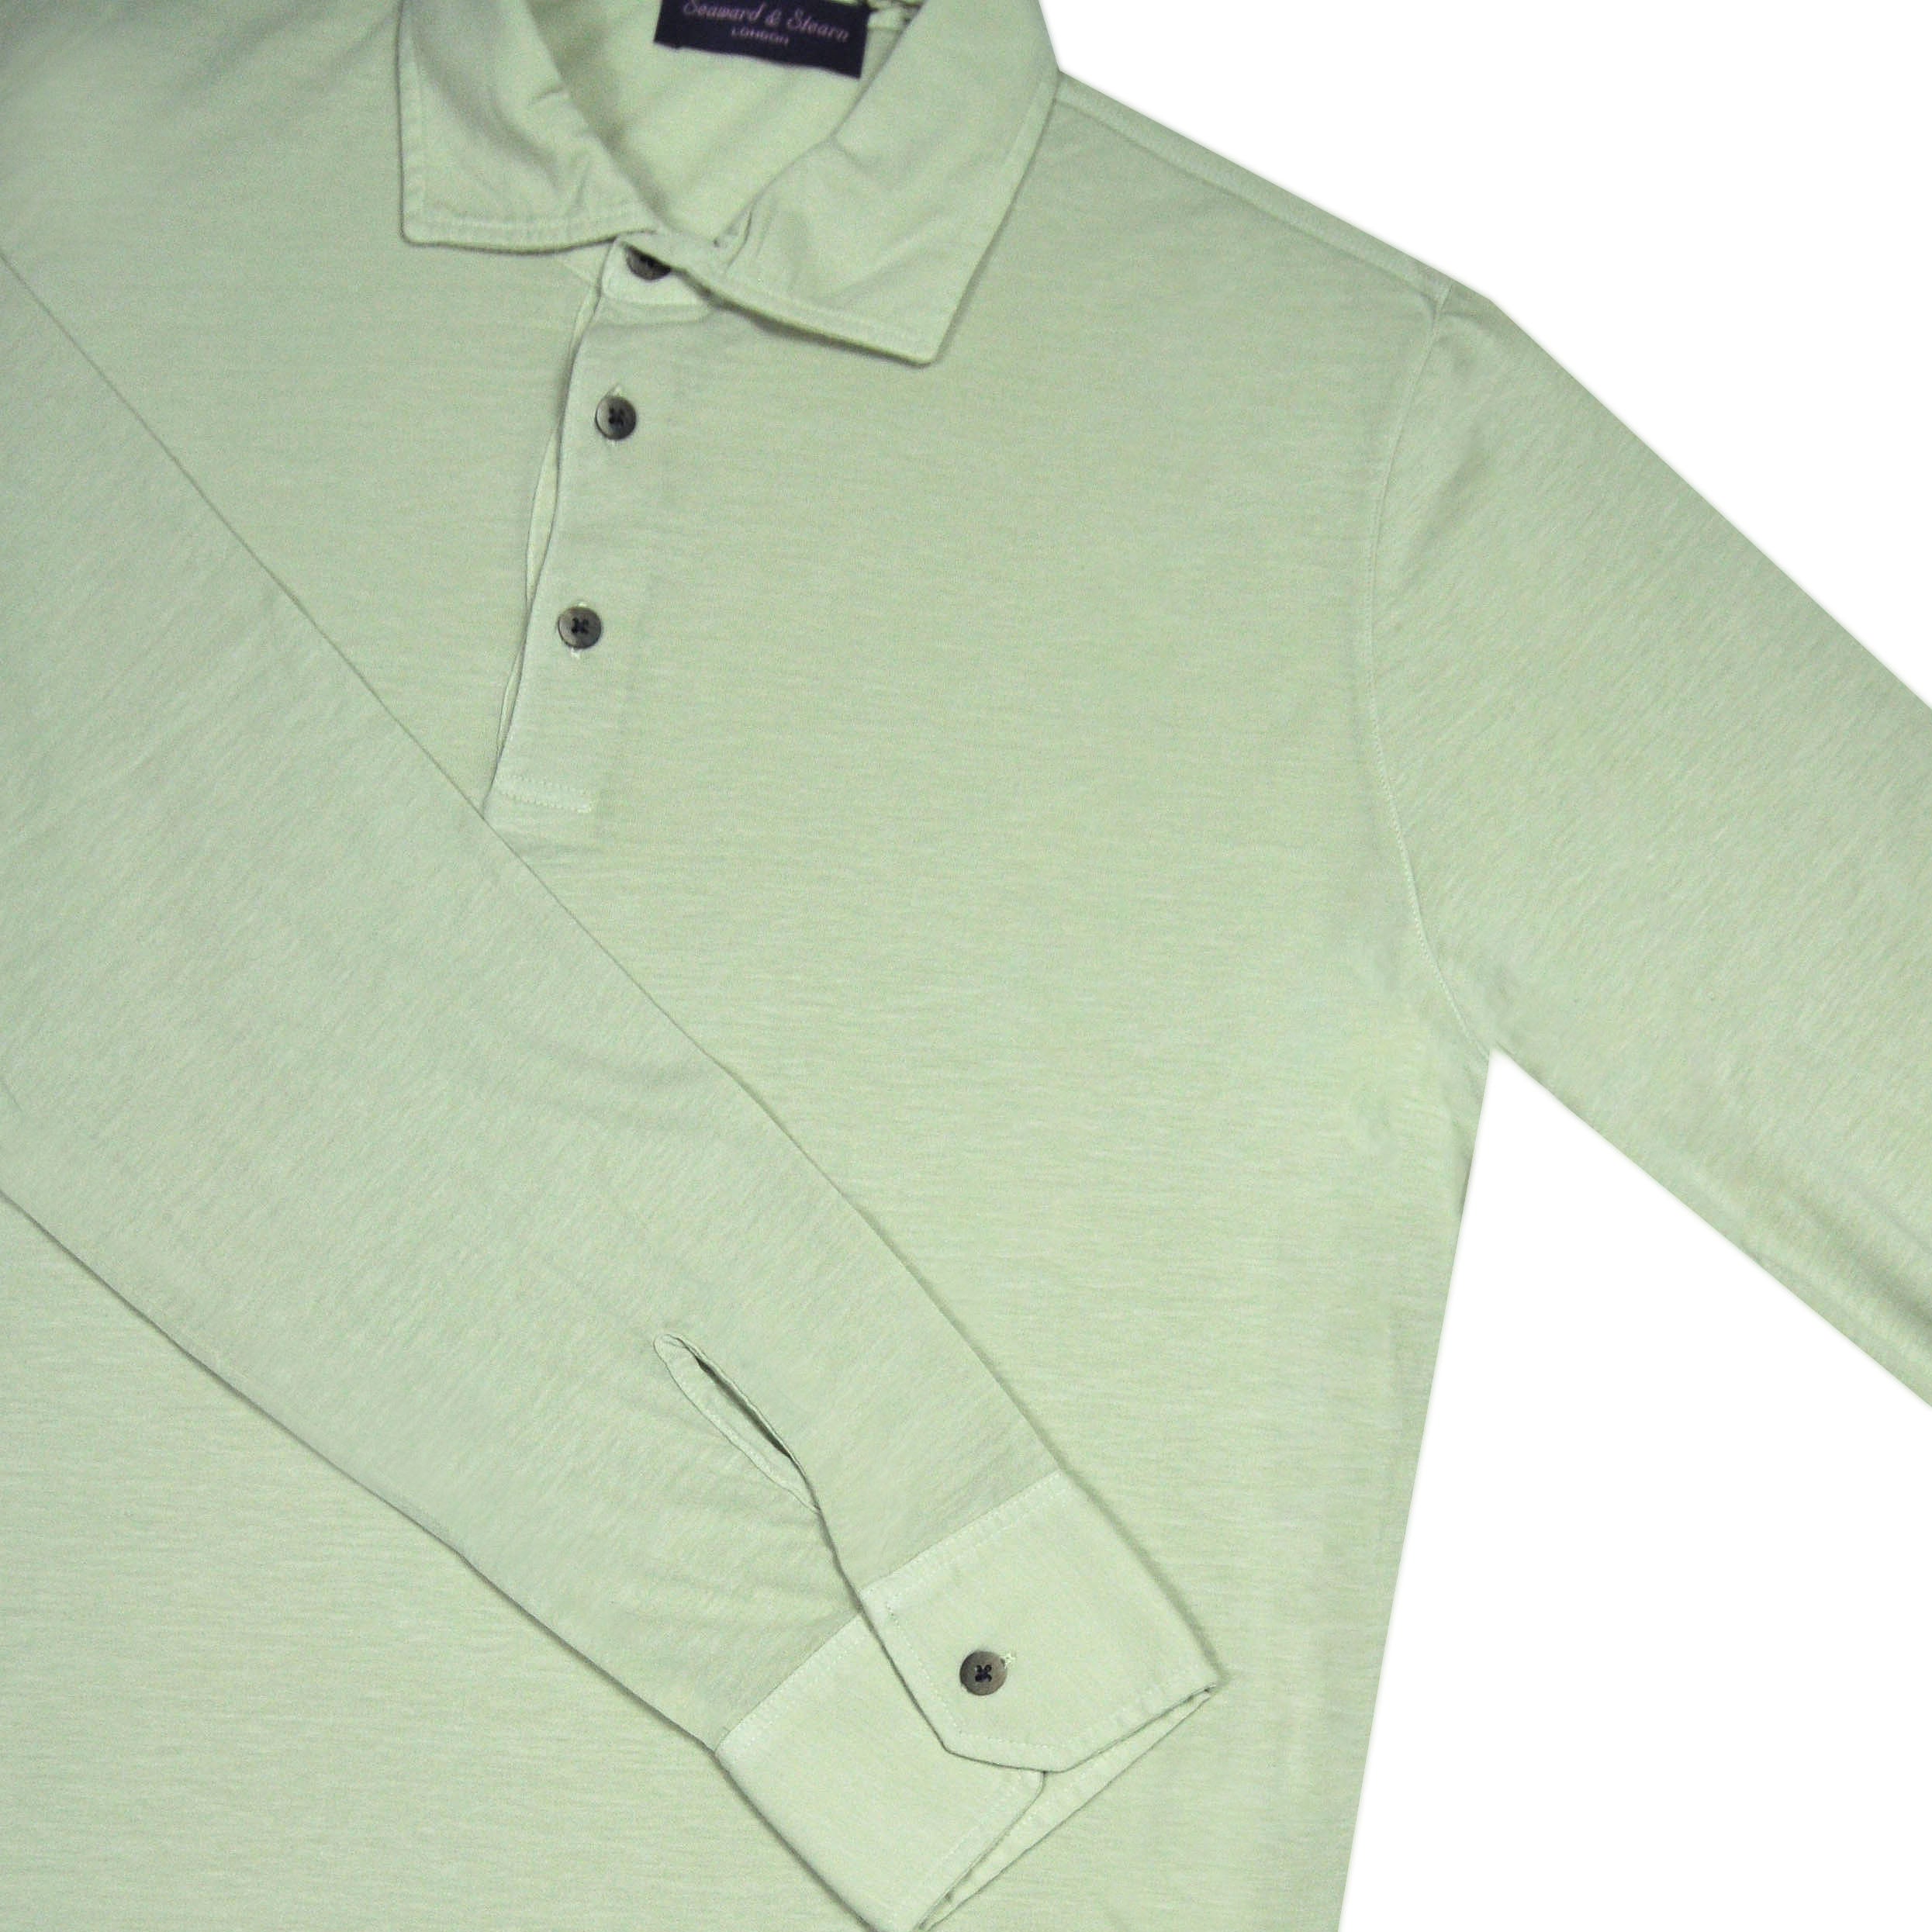 Super Fine Cotton Long Sleeve Polo Shirt in Ecru